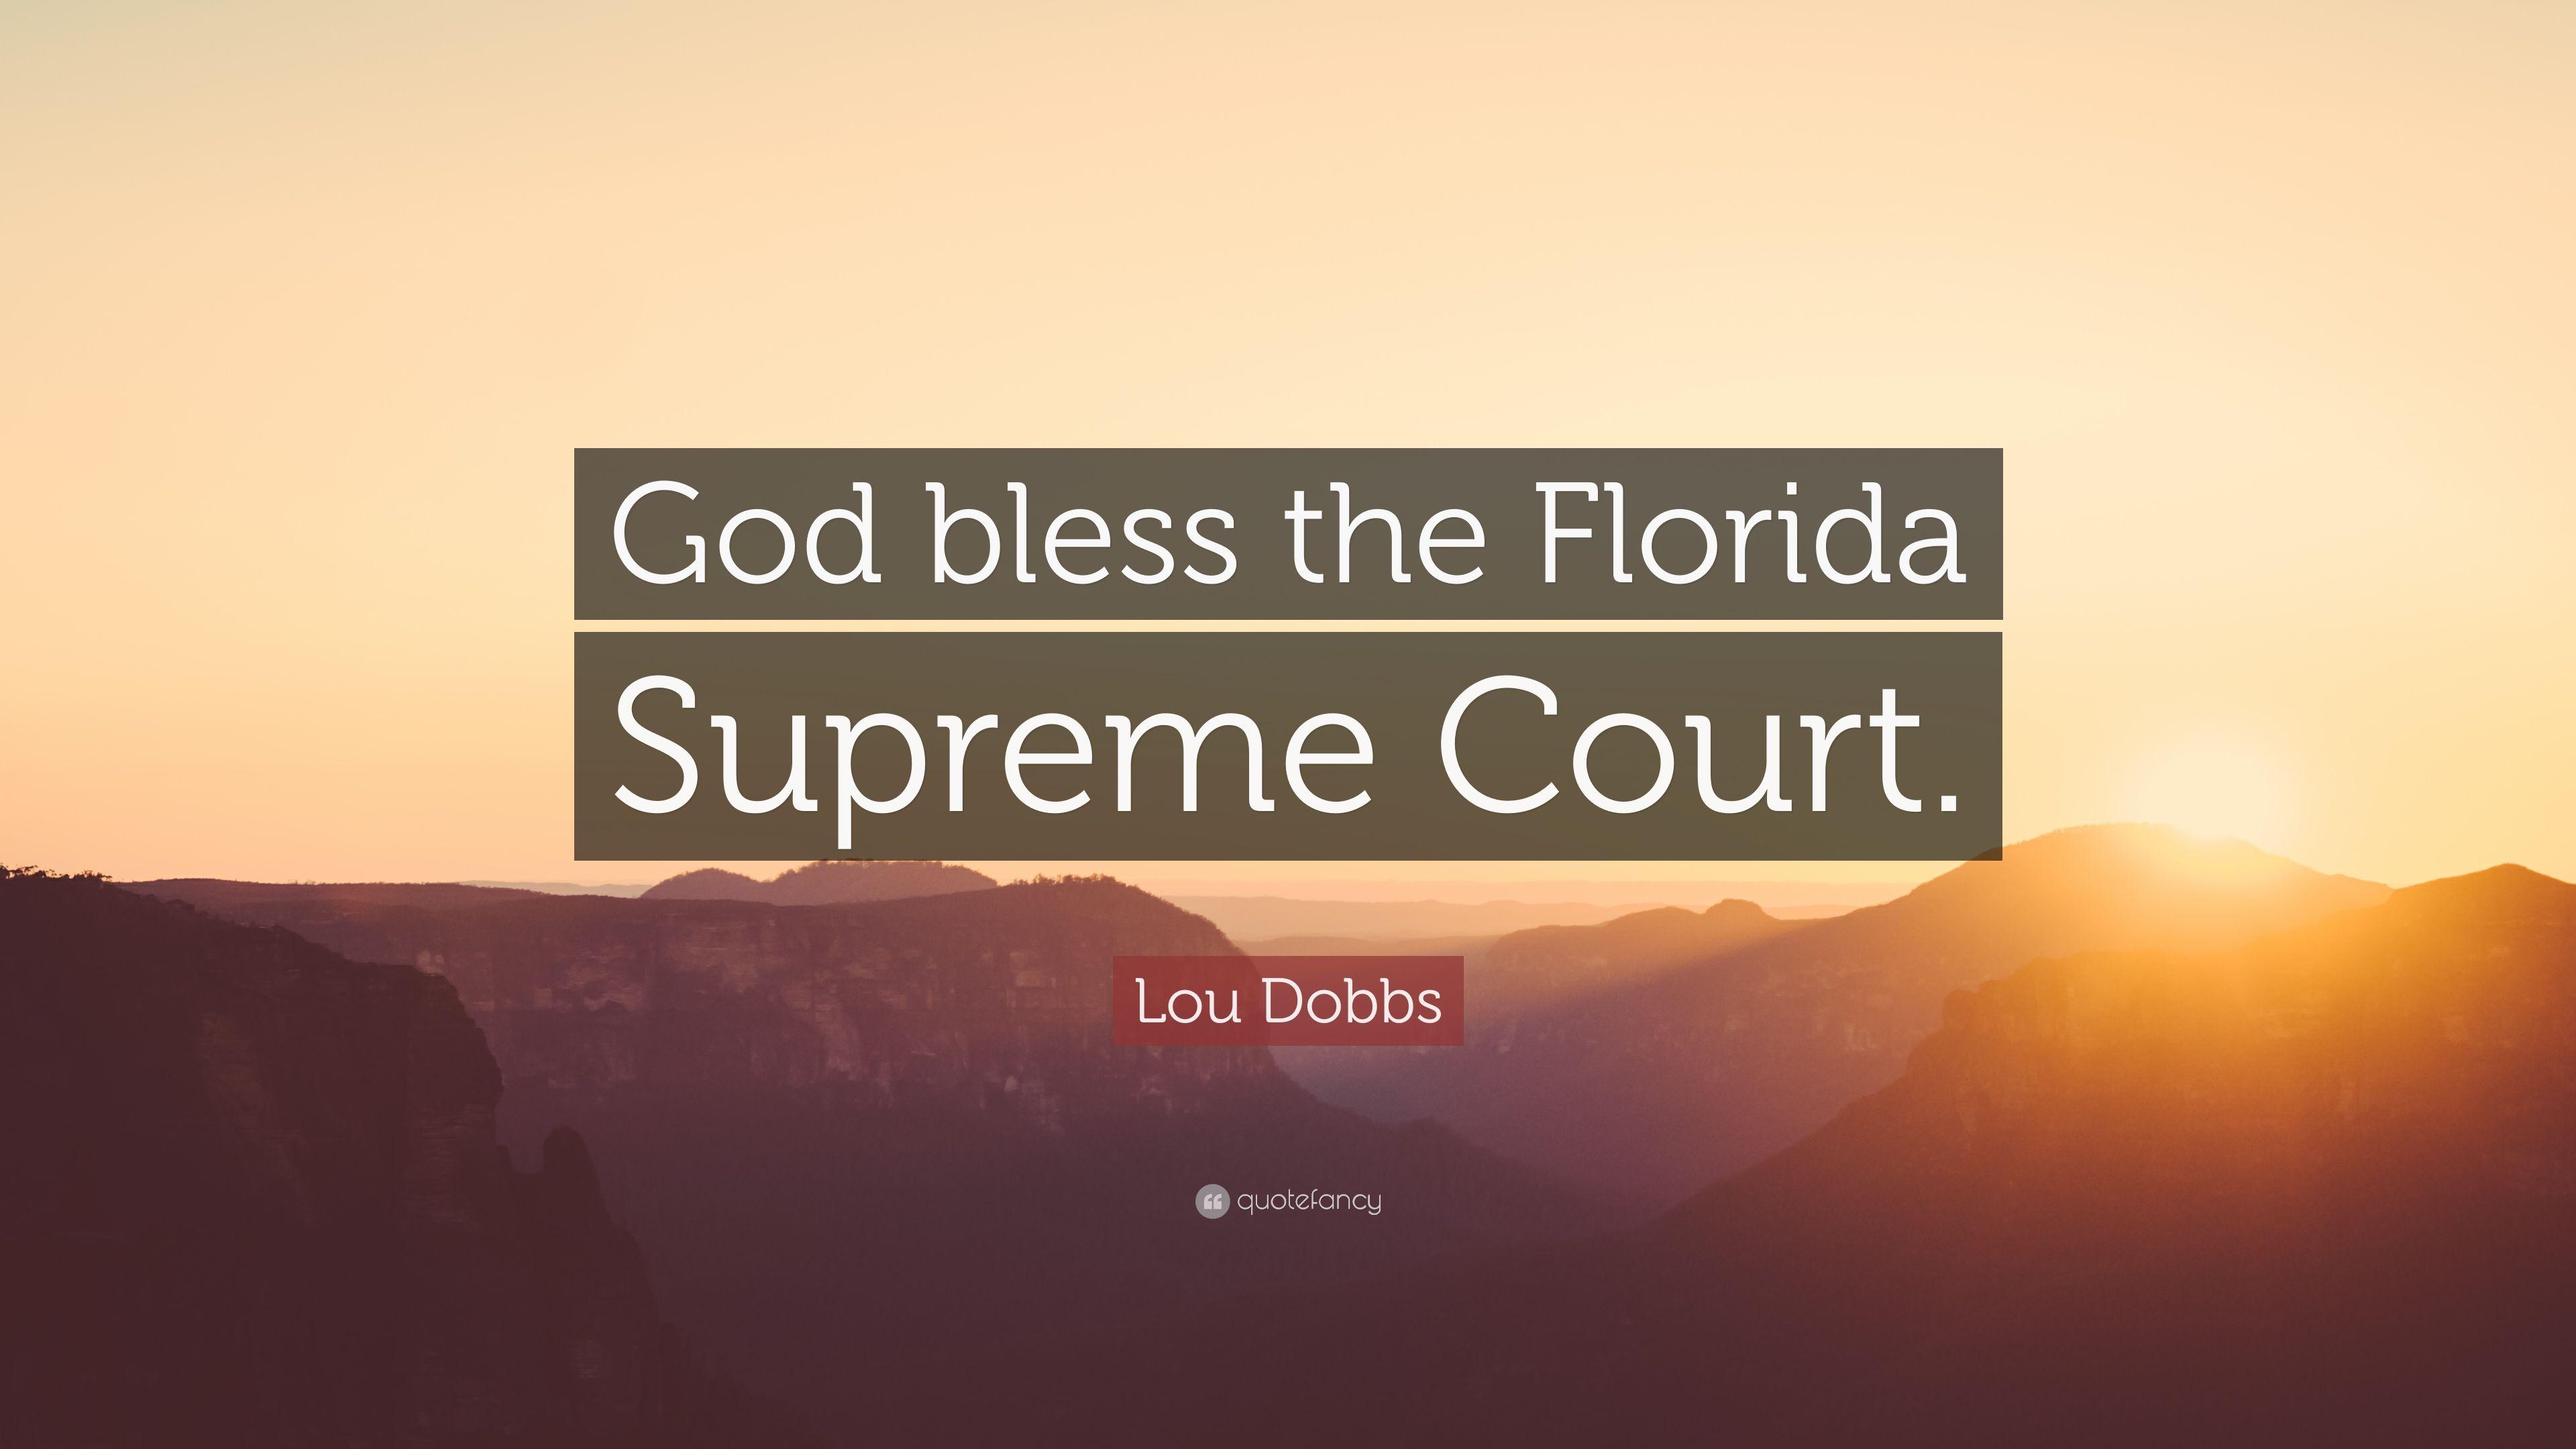 Lou Dobbs Quote: “God bless the Florida Supreme Court.” 7